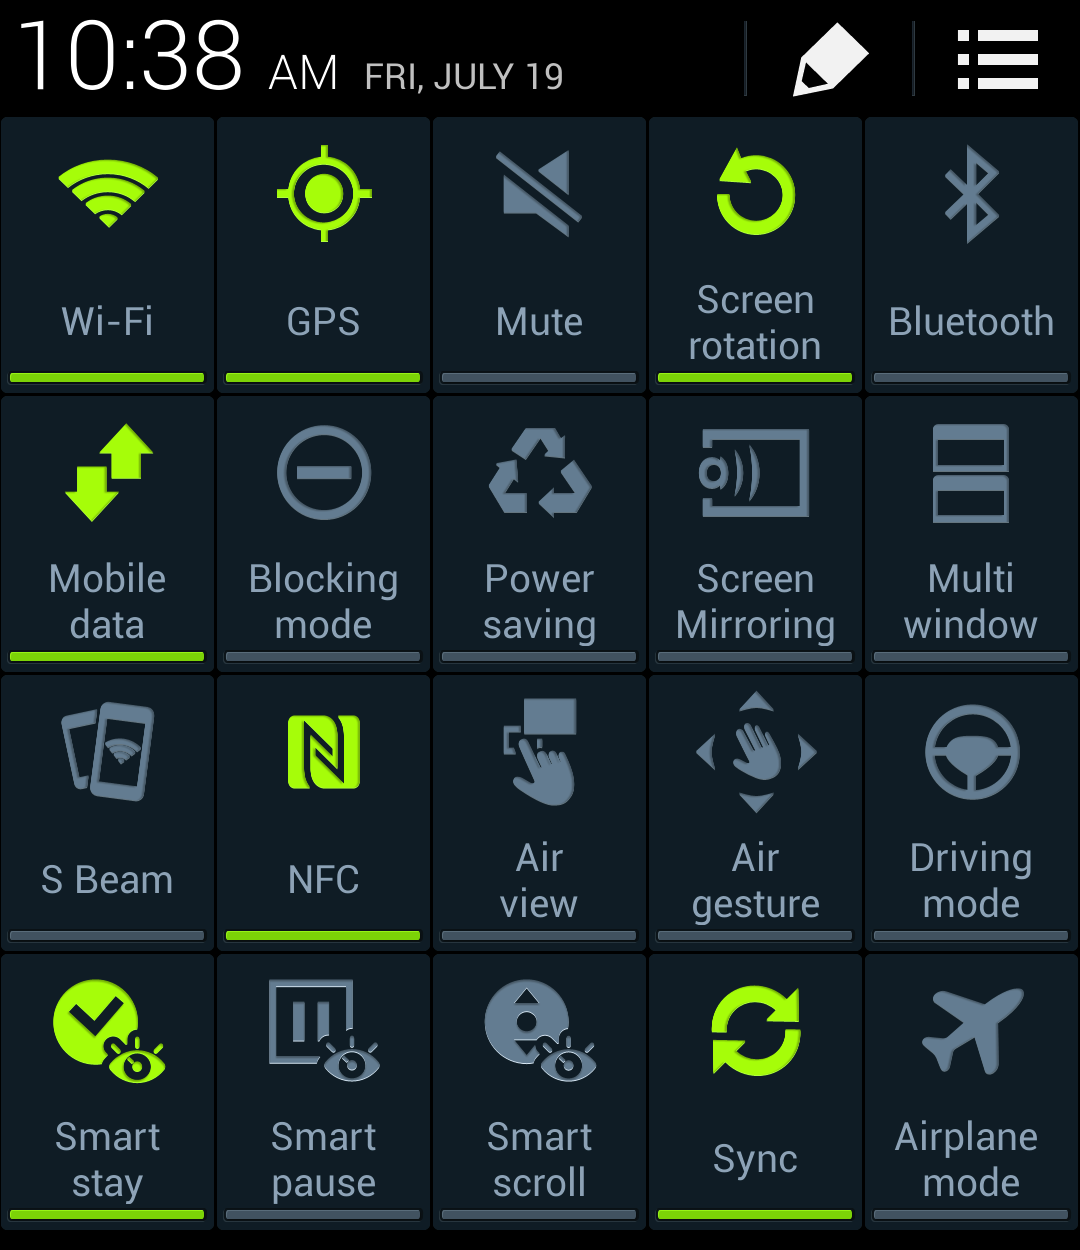 Samsung Galaxy s3 icons. Значок интернета на телефоне андроид. Значки в смартфоне самсунг. Пиктограммы на телефоне самсунг. Значок в верхней части экрана